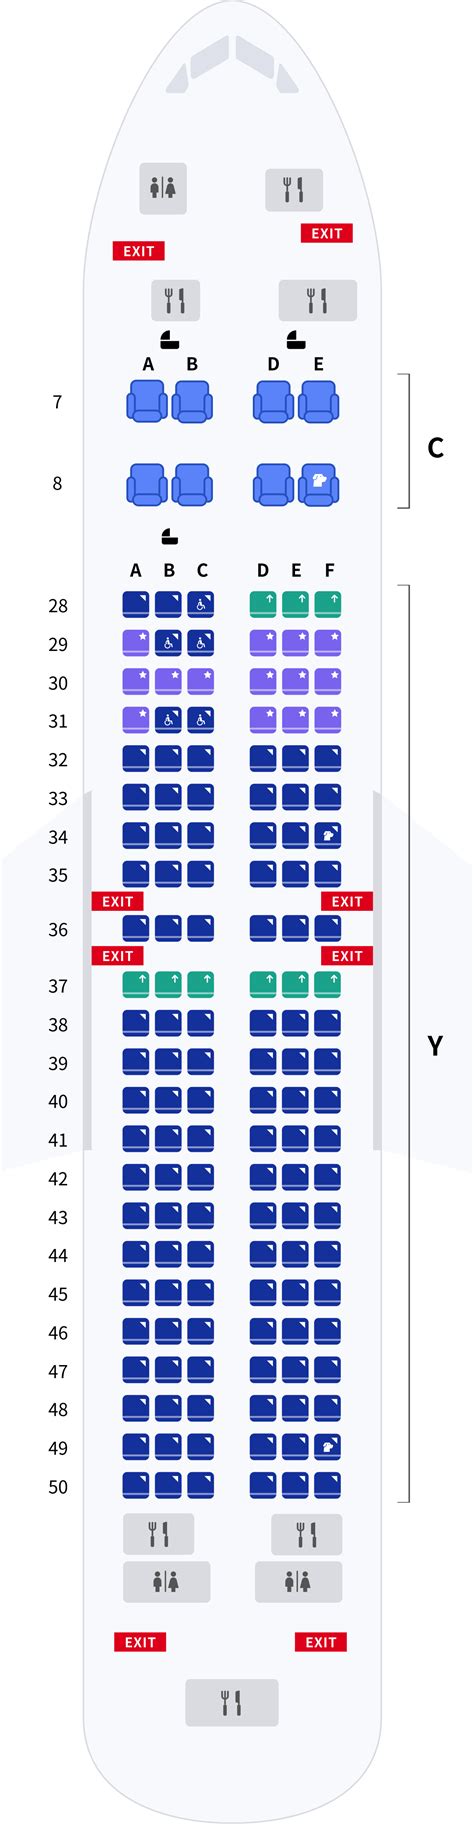 737 Max8 Seating Chart